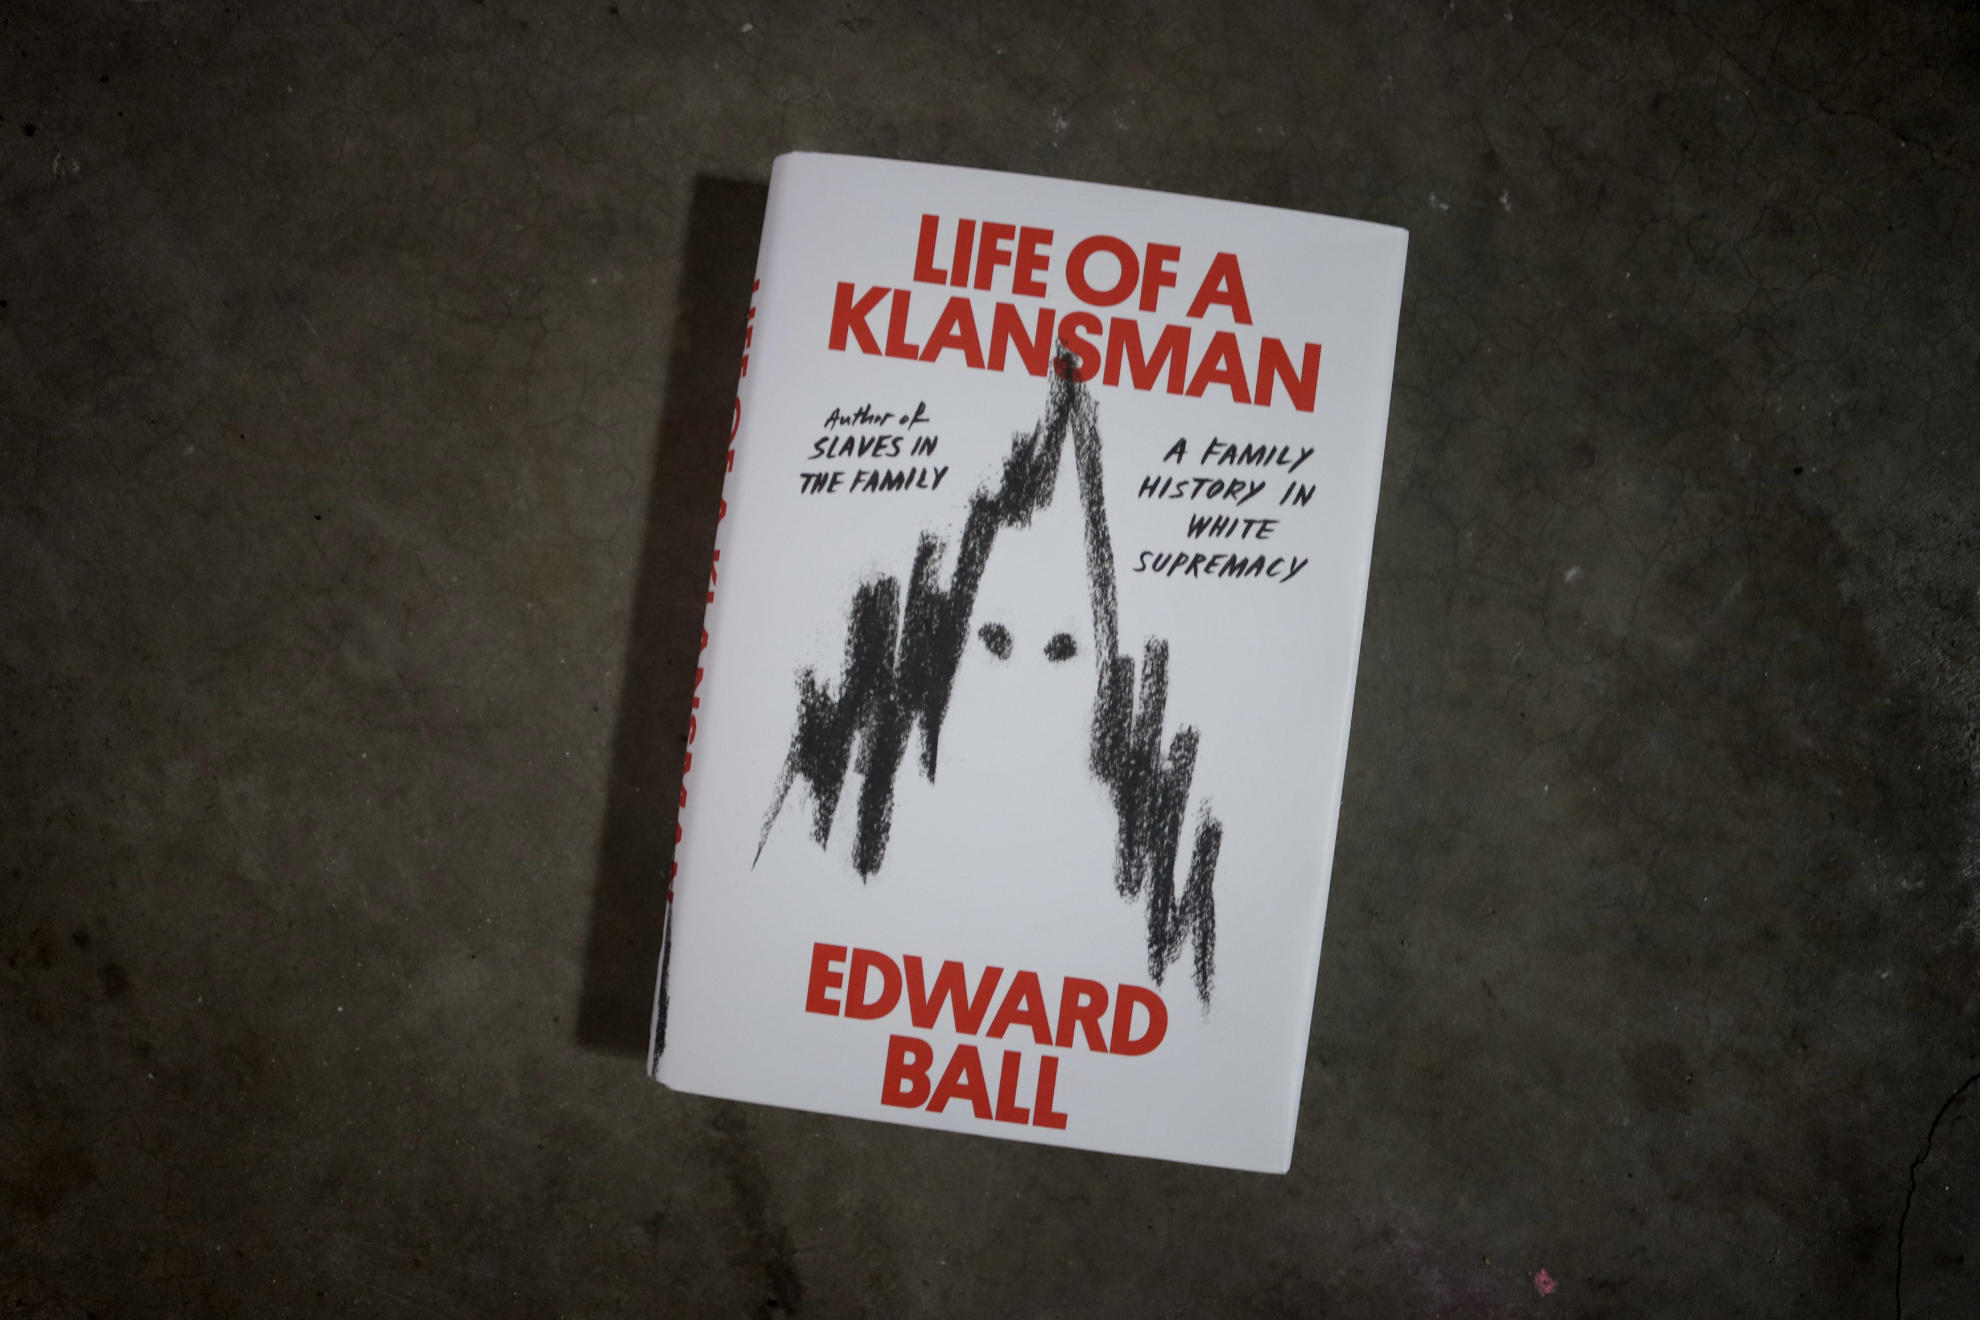 Life of a Klansman by Edward Ball